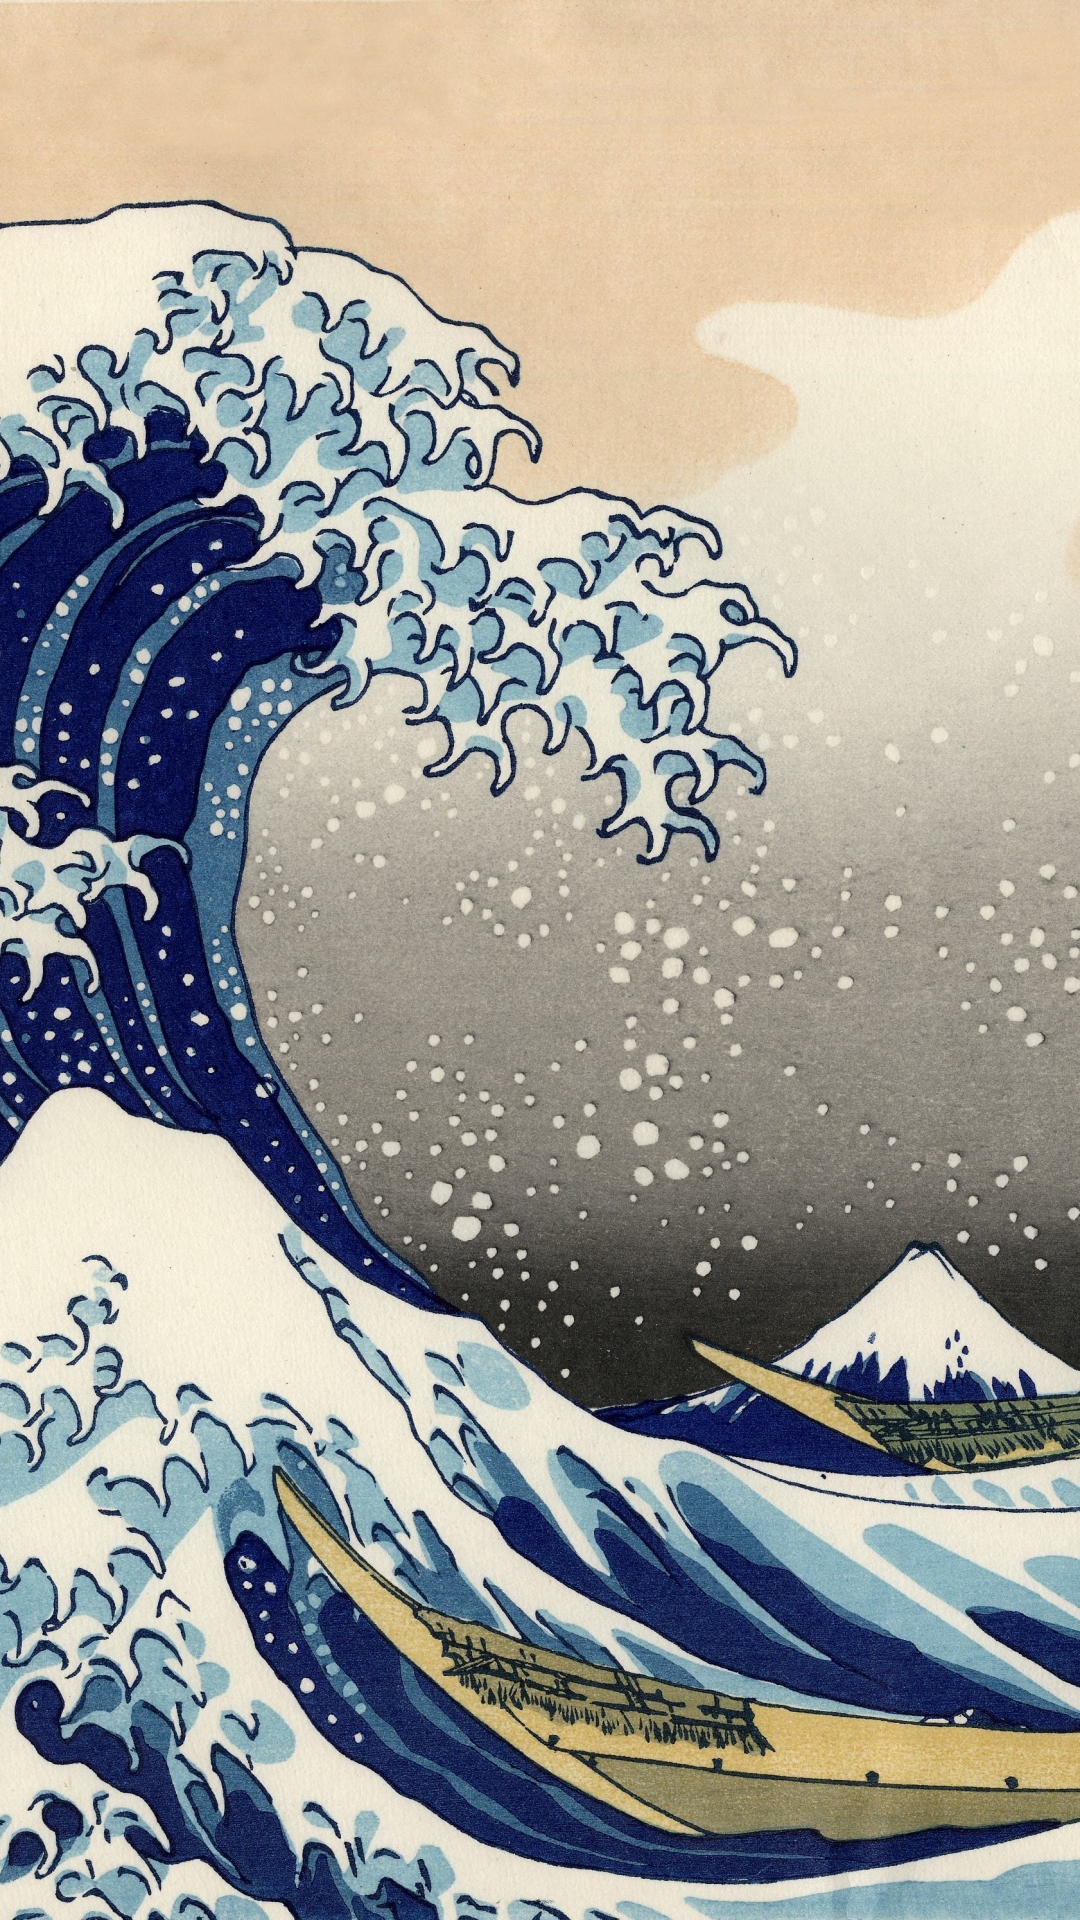 iPhone 5 - Artistic/The Great Wave Off Kanagawa - Wallpaper ID: 582819